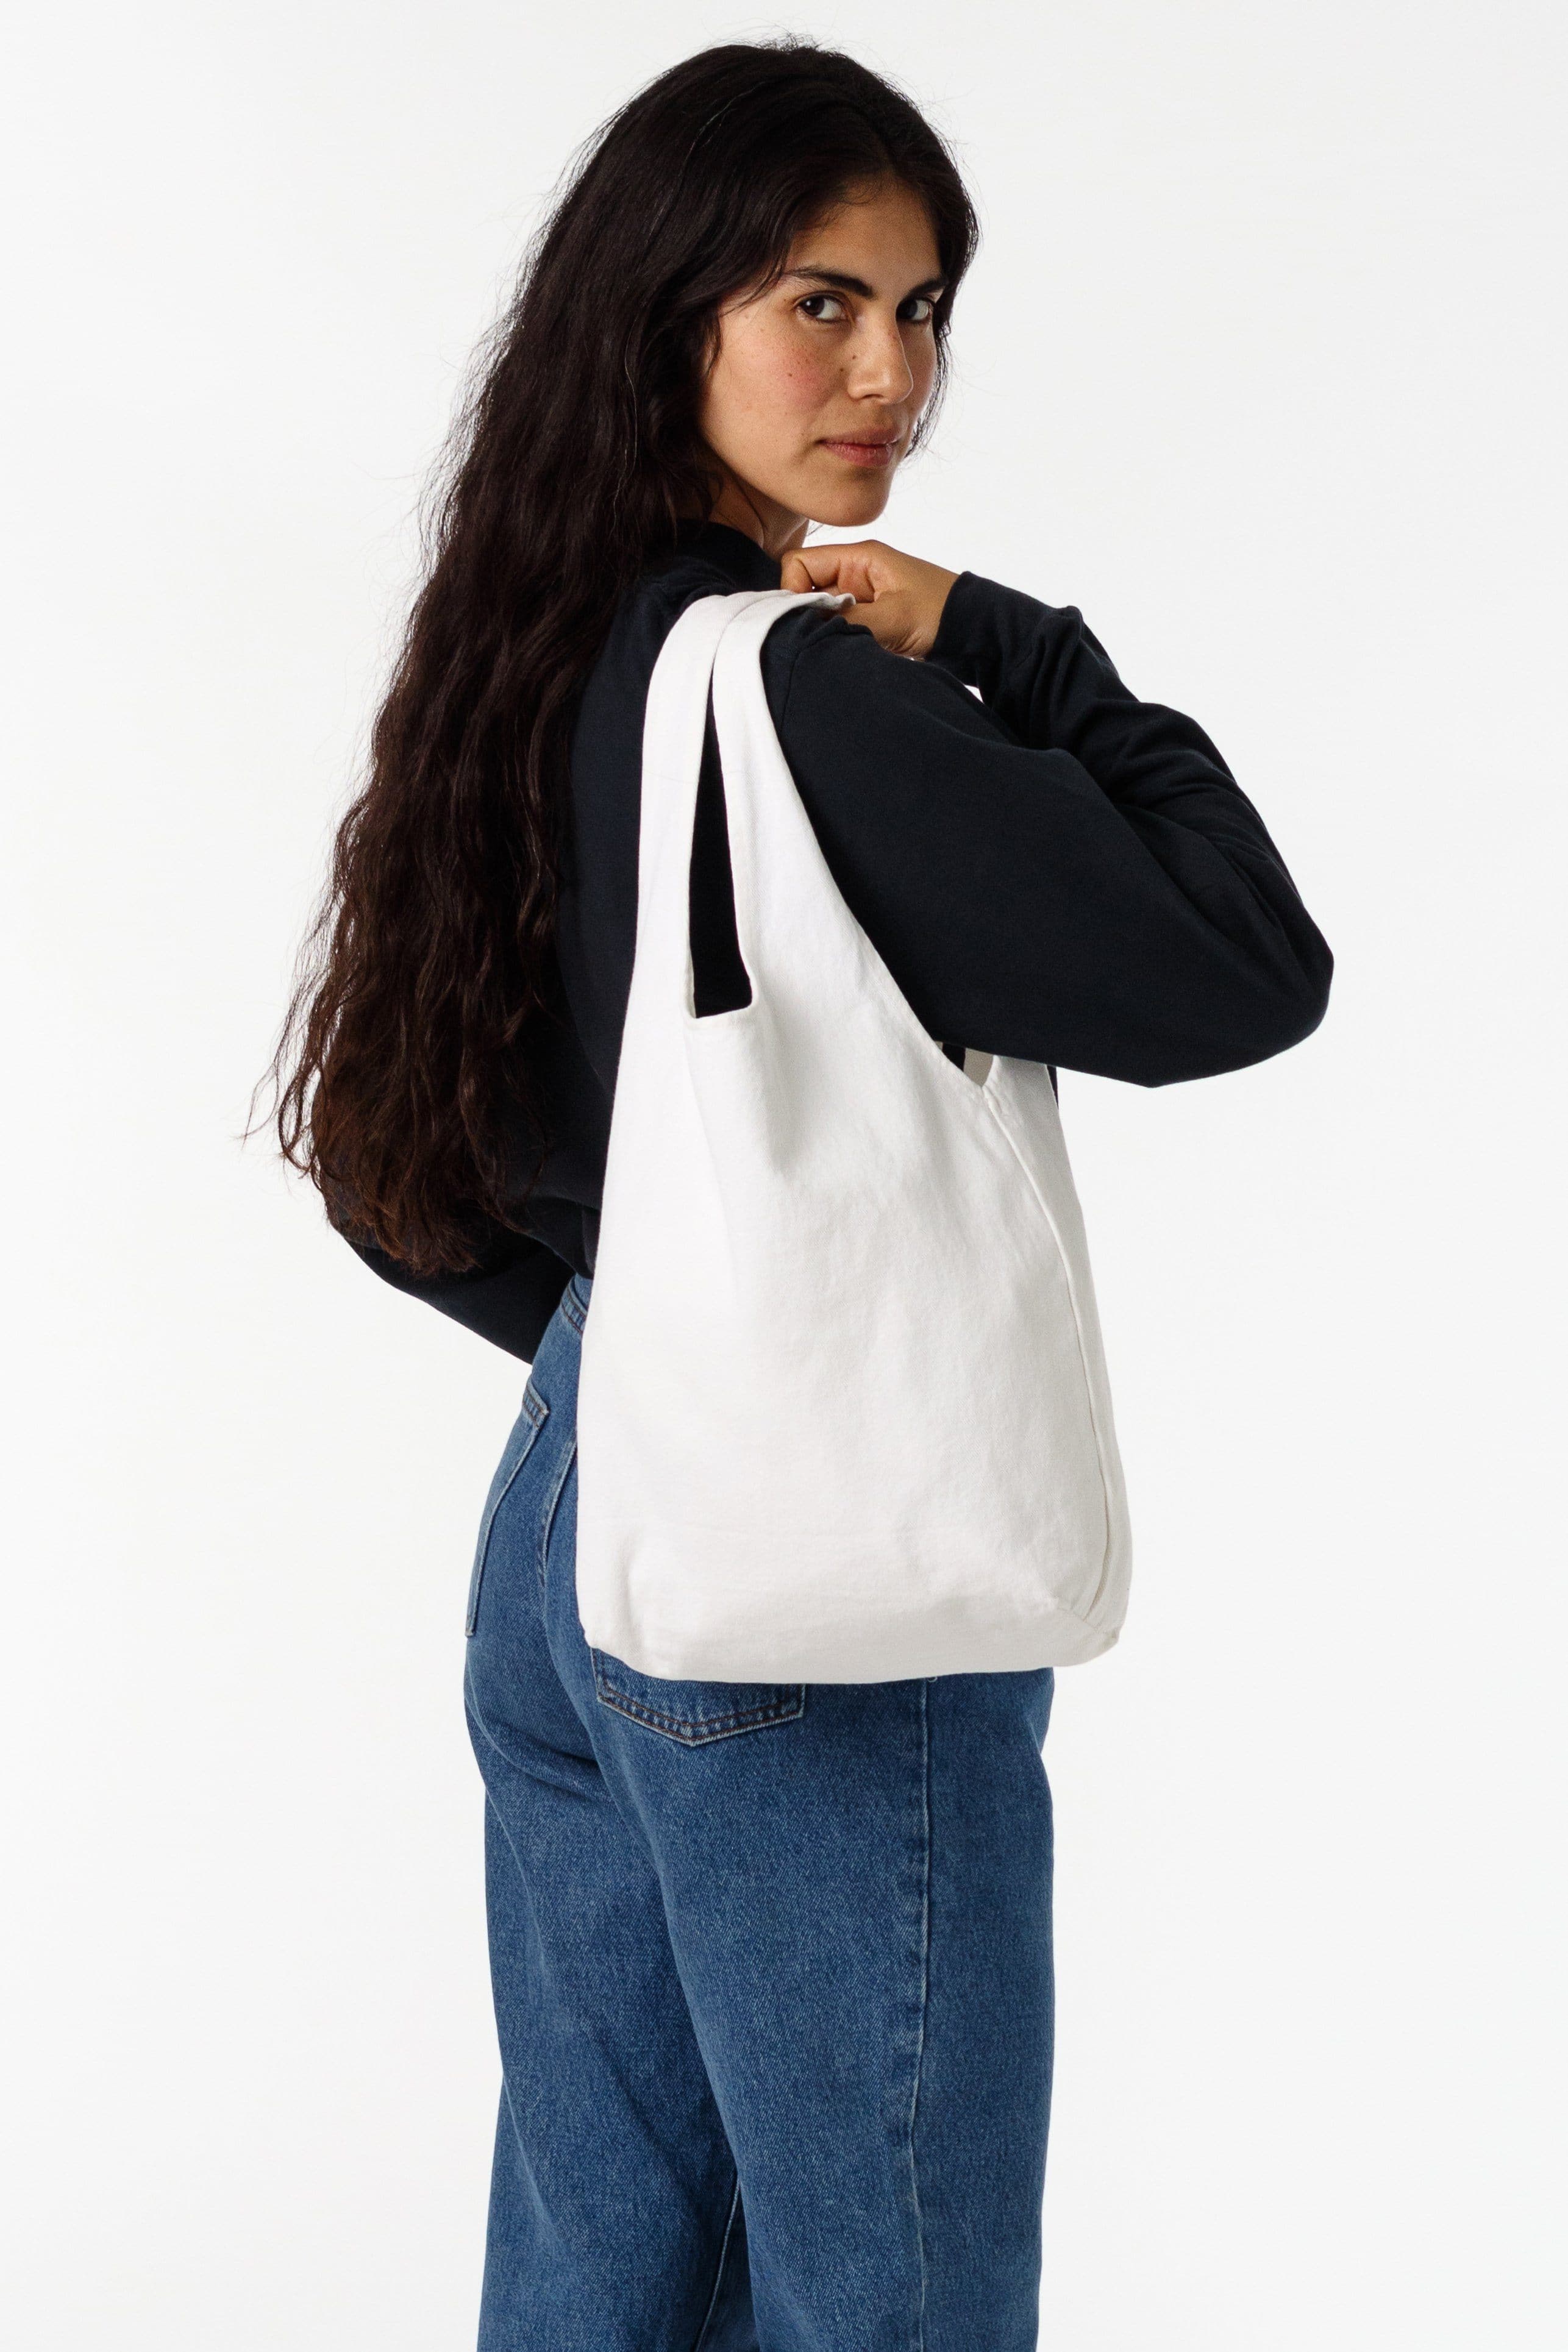 Denim Everyday Tote Bag – BIG BUD PRESS